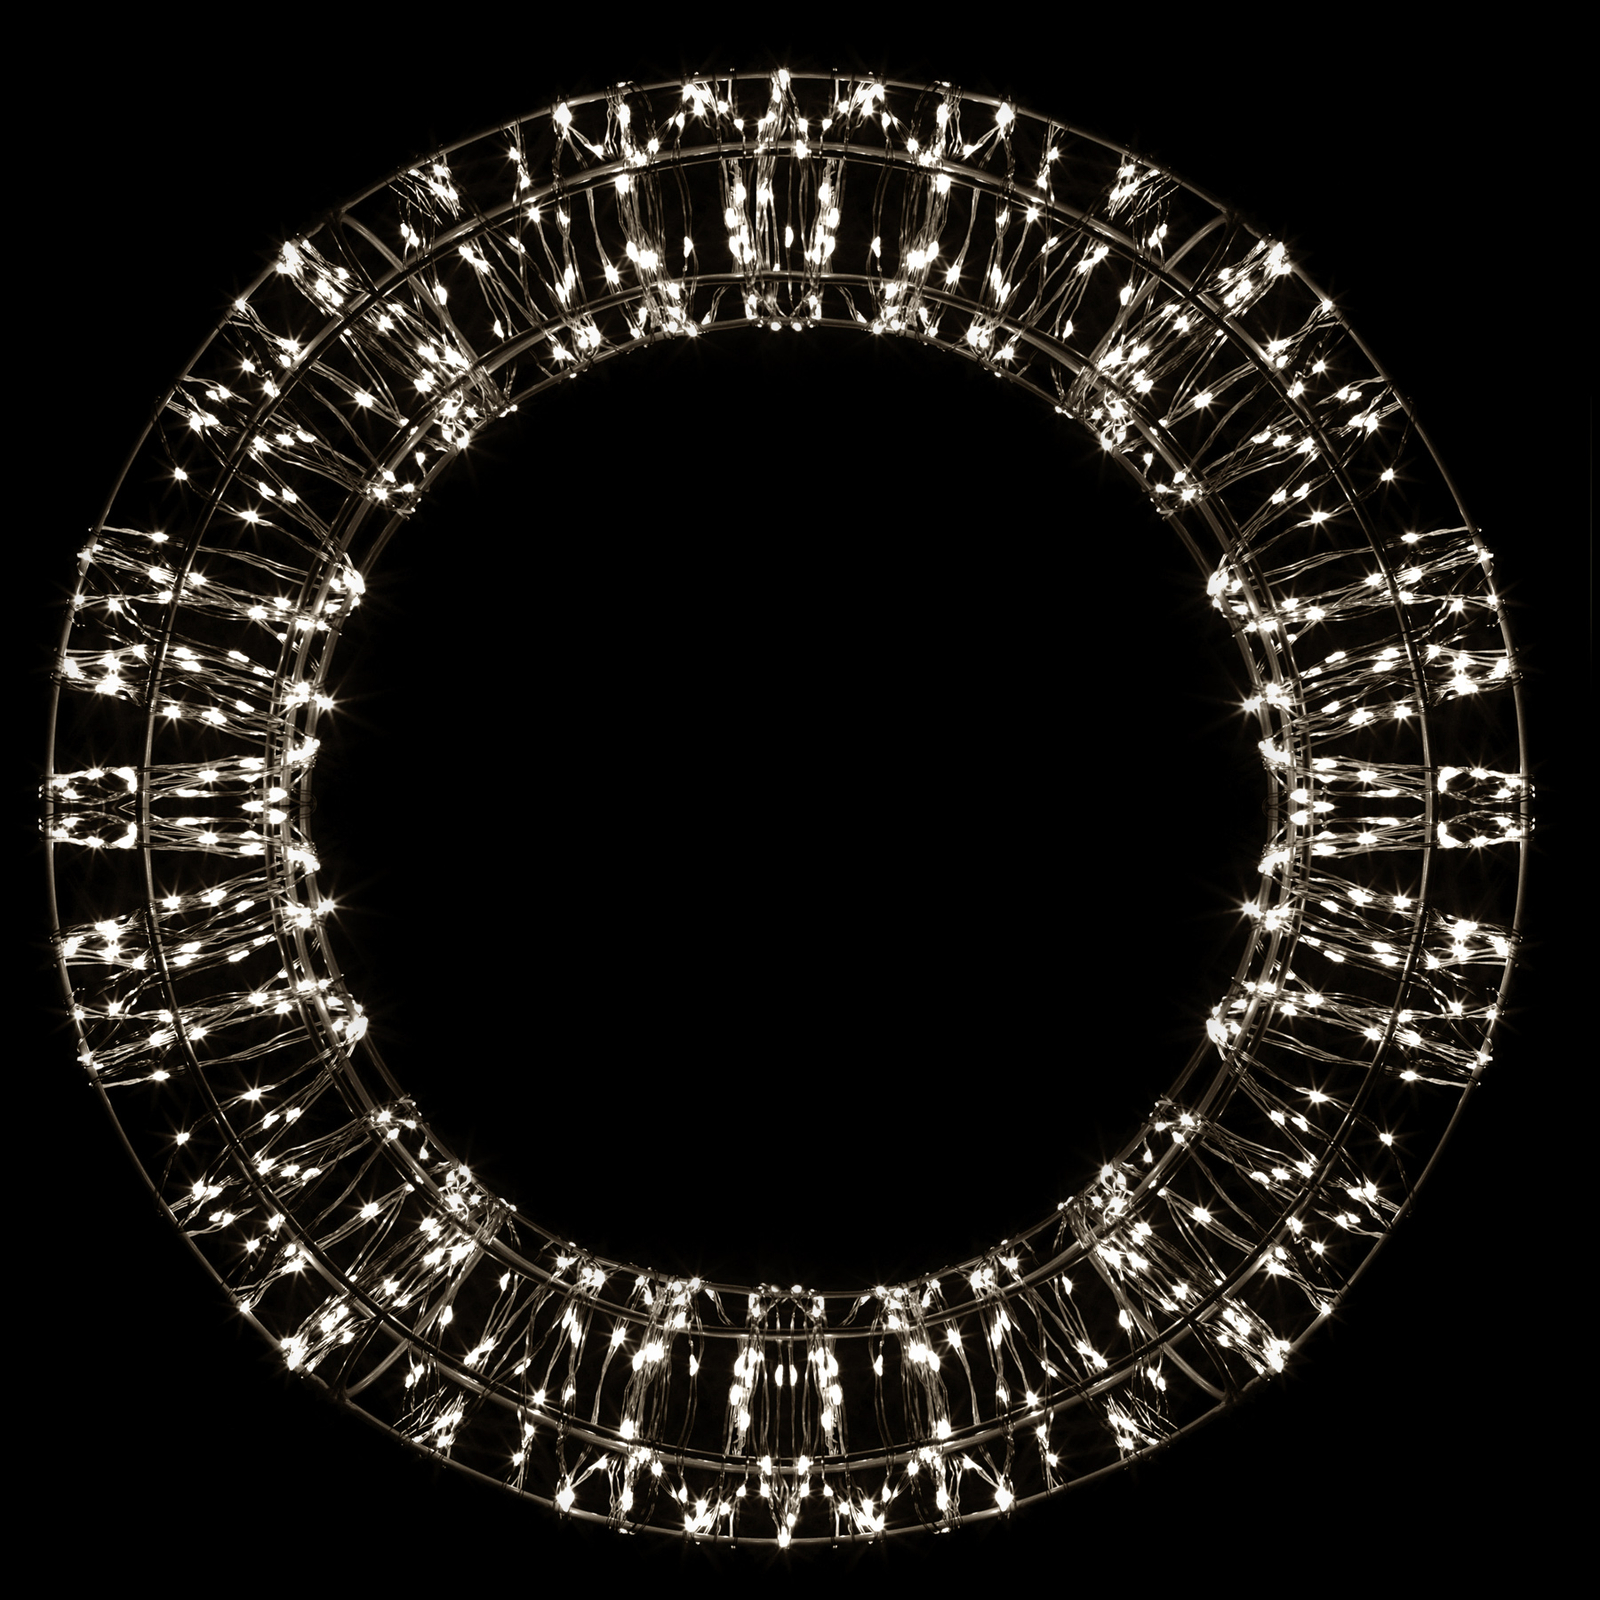 LED-Weihnachtskranz, schwarz, 800 LEDs, Ø 50cm